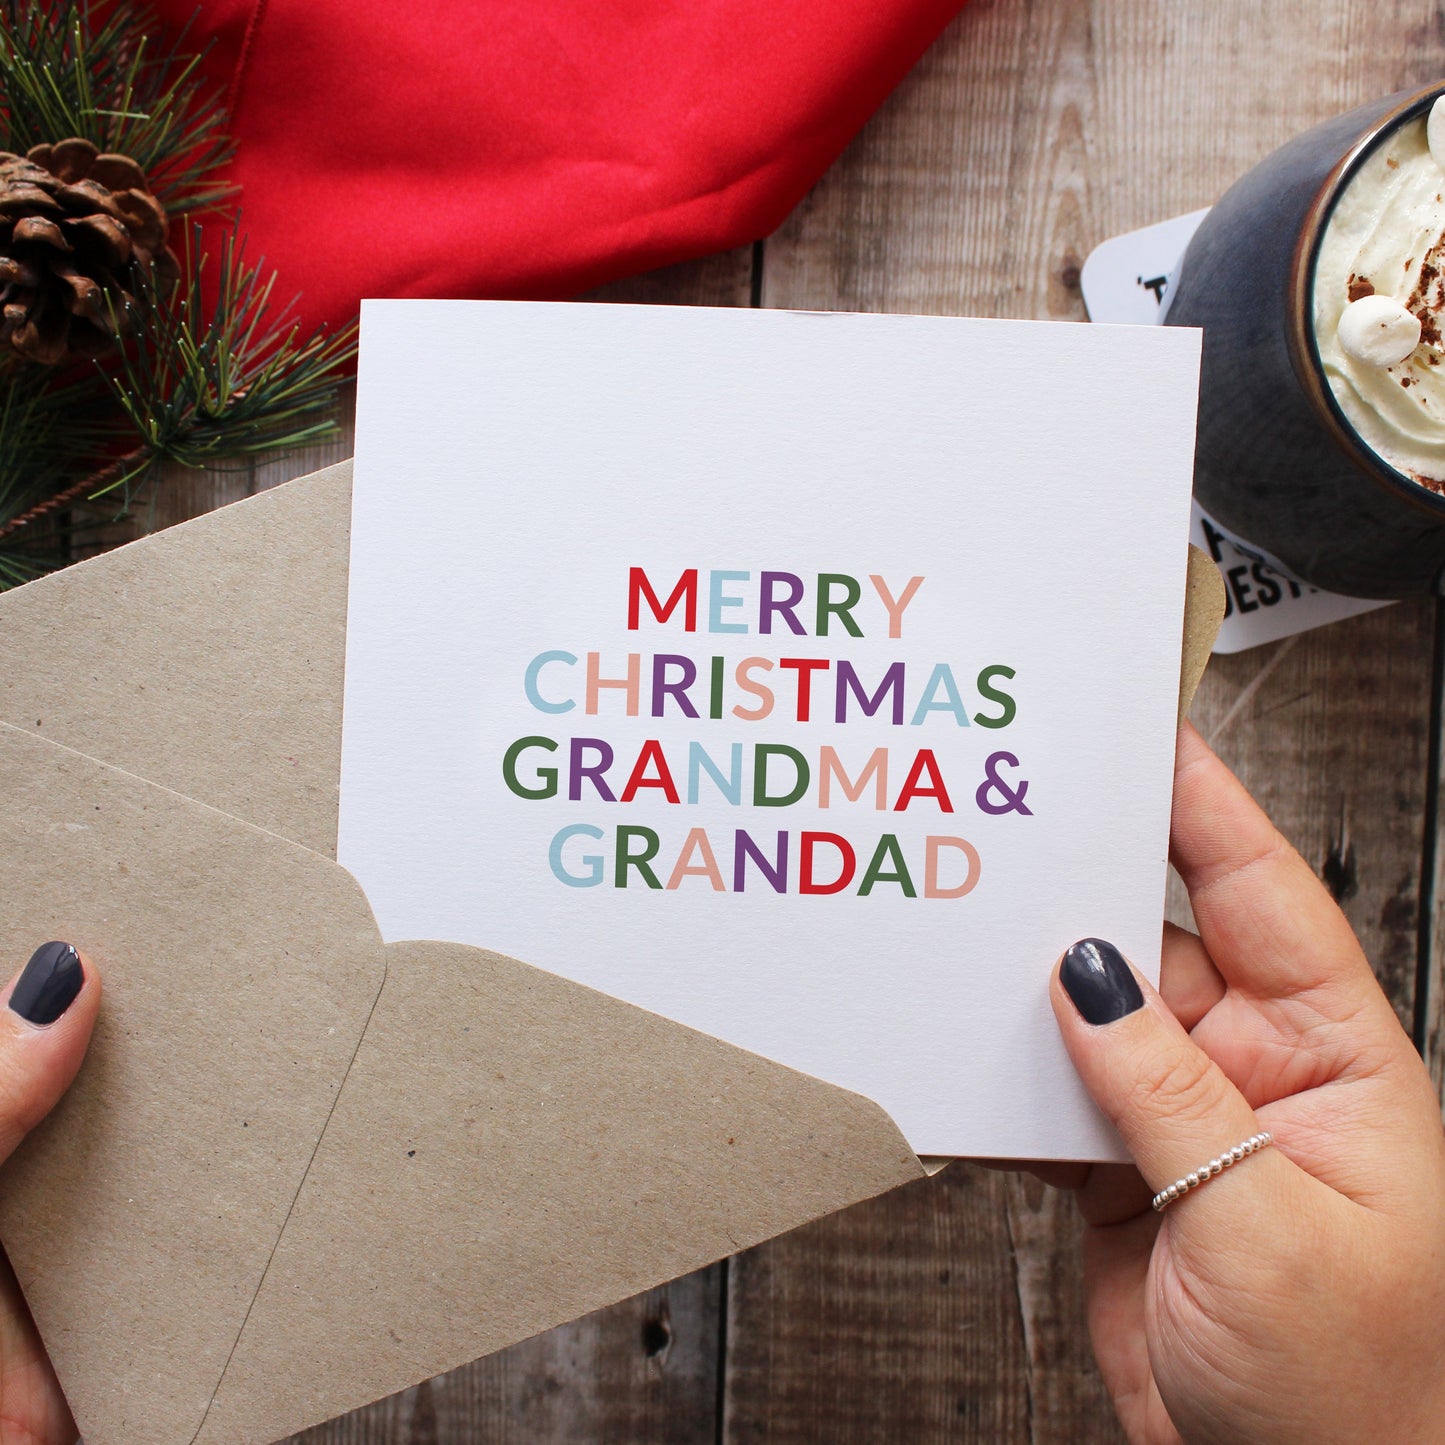 Grandma and grandad Christmas card from Purple Tree Designs